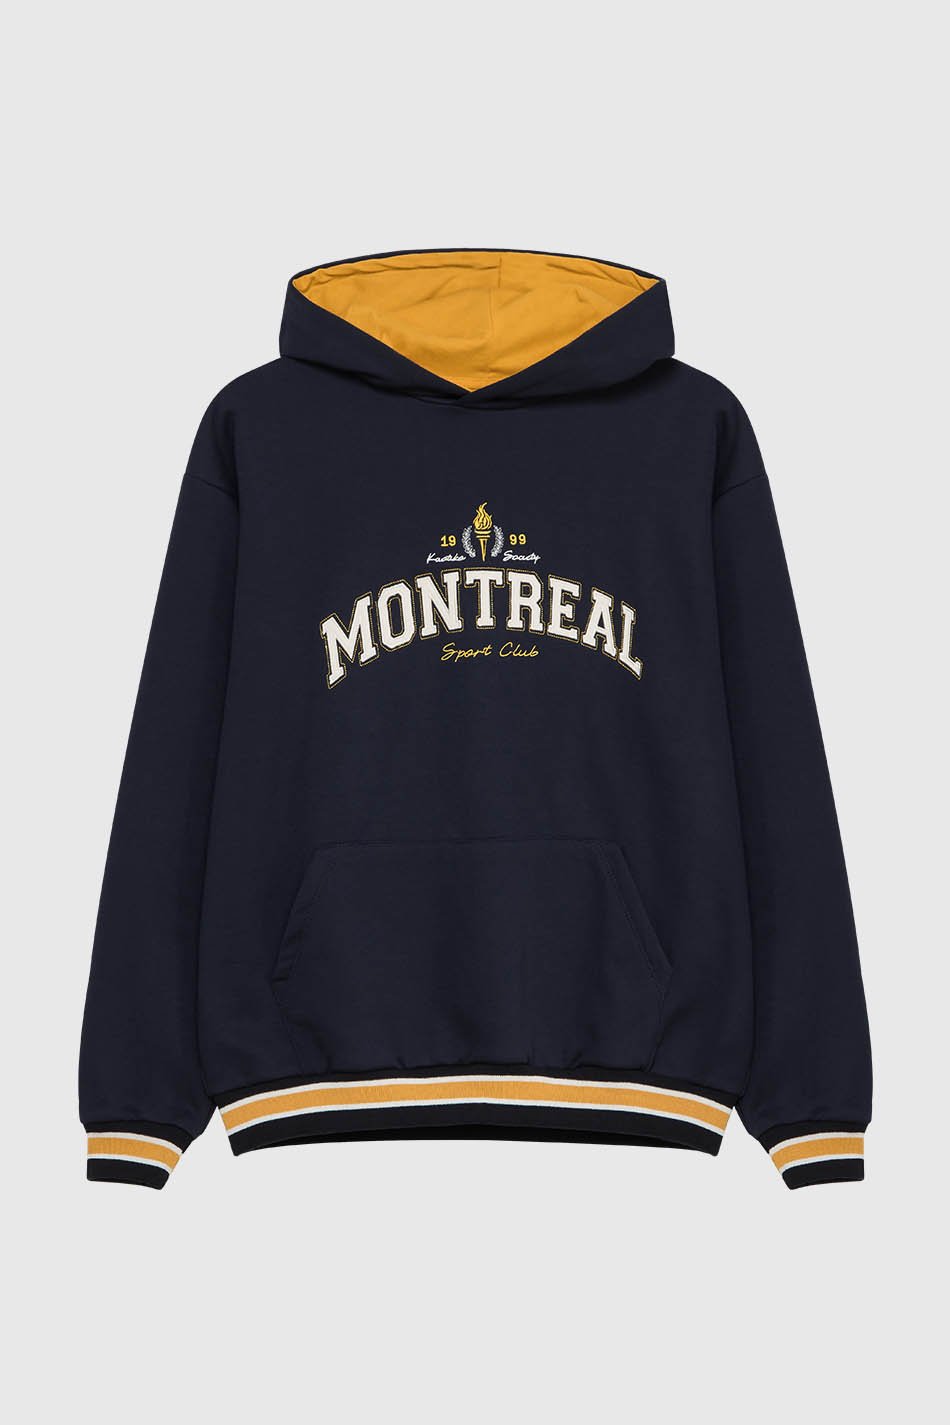 Montreal Sport Club Sweatshirt